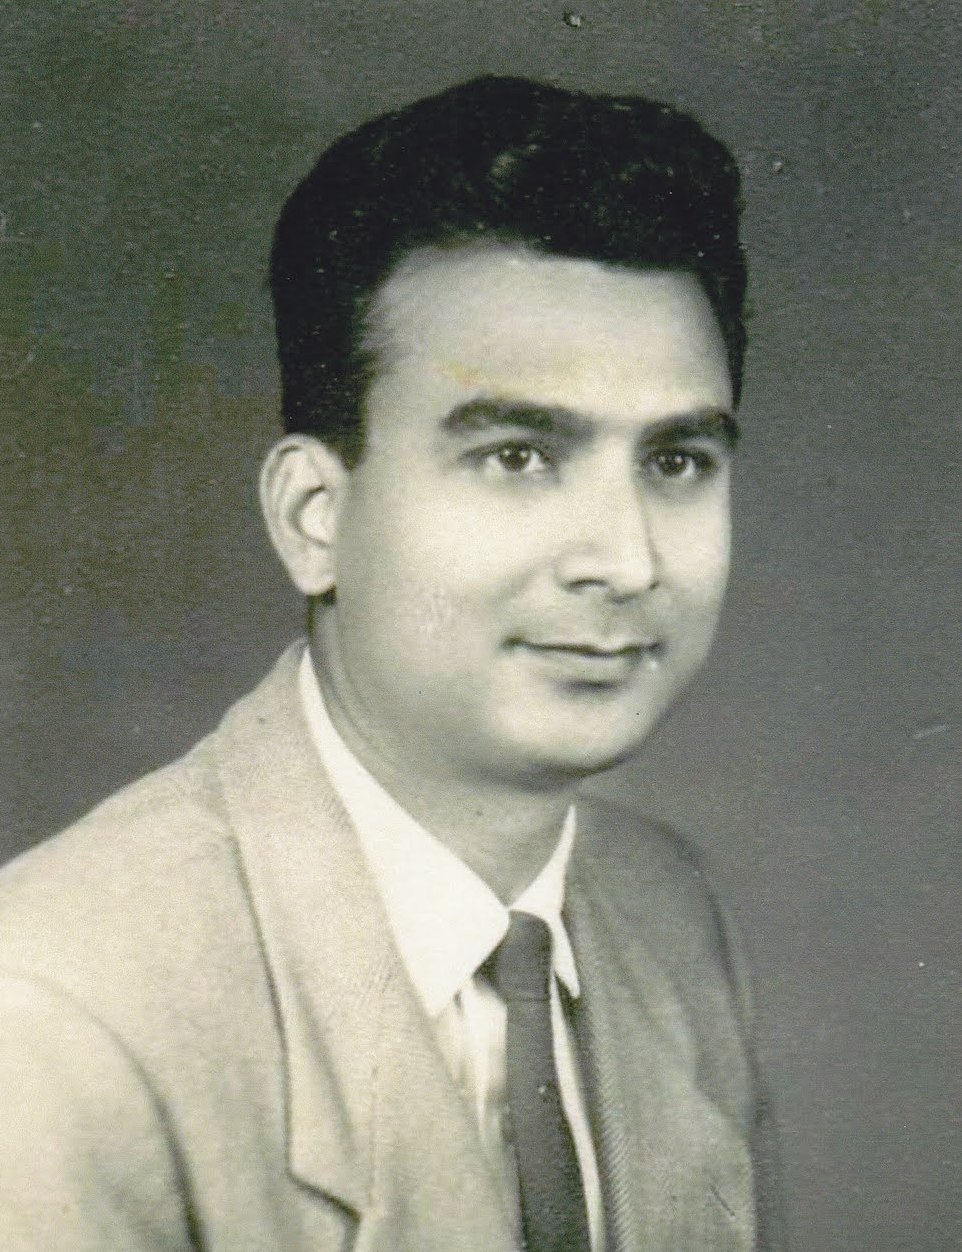 Dr. Arjoon Jagan